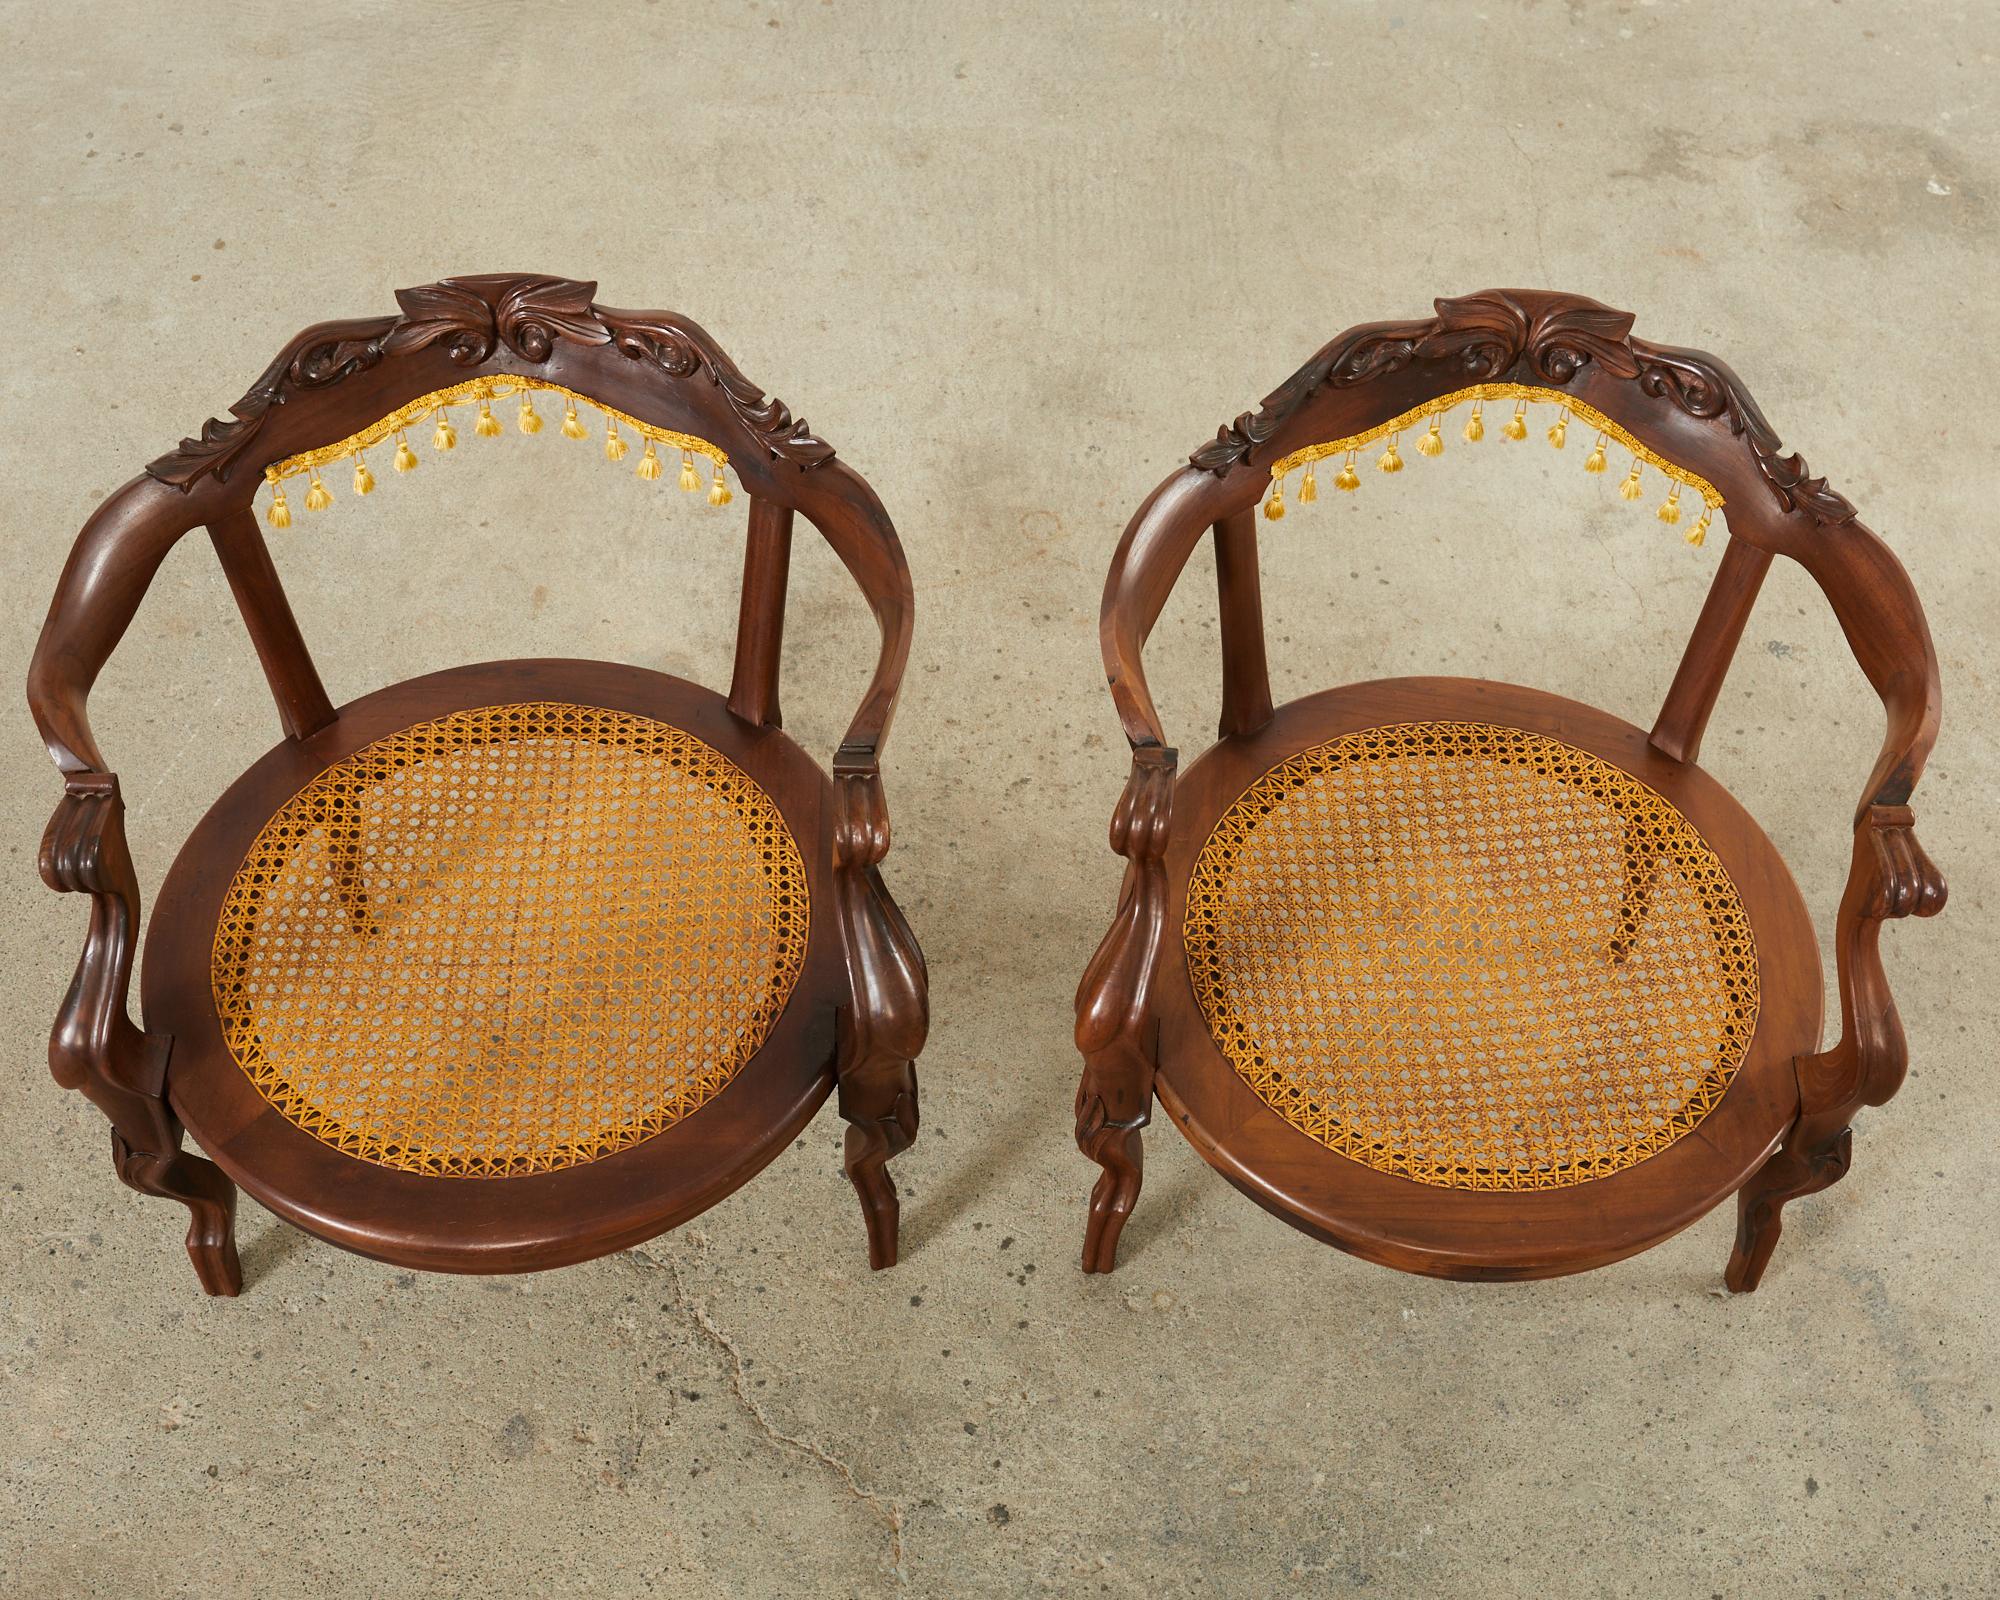 Rococo Paire de fauteuils barils cannés de style rococo vénitien en vente